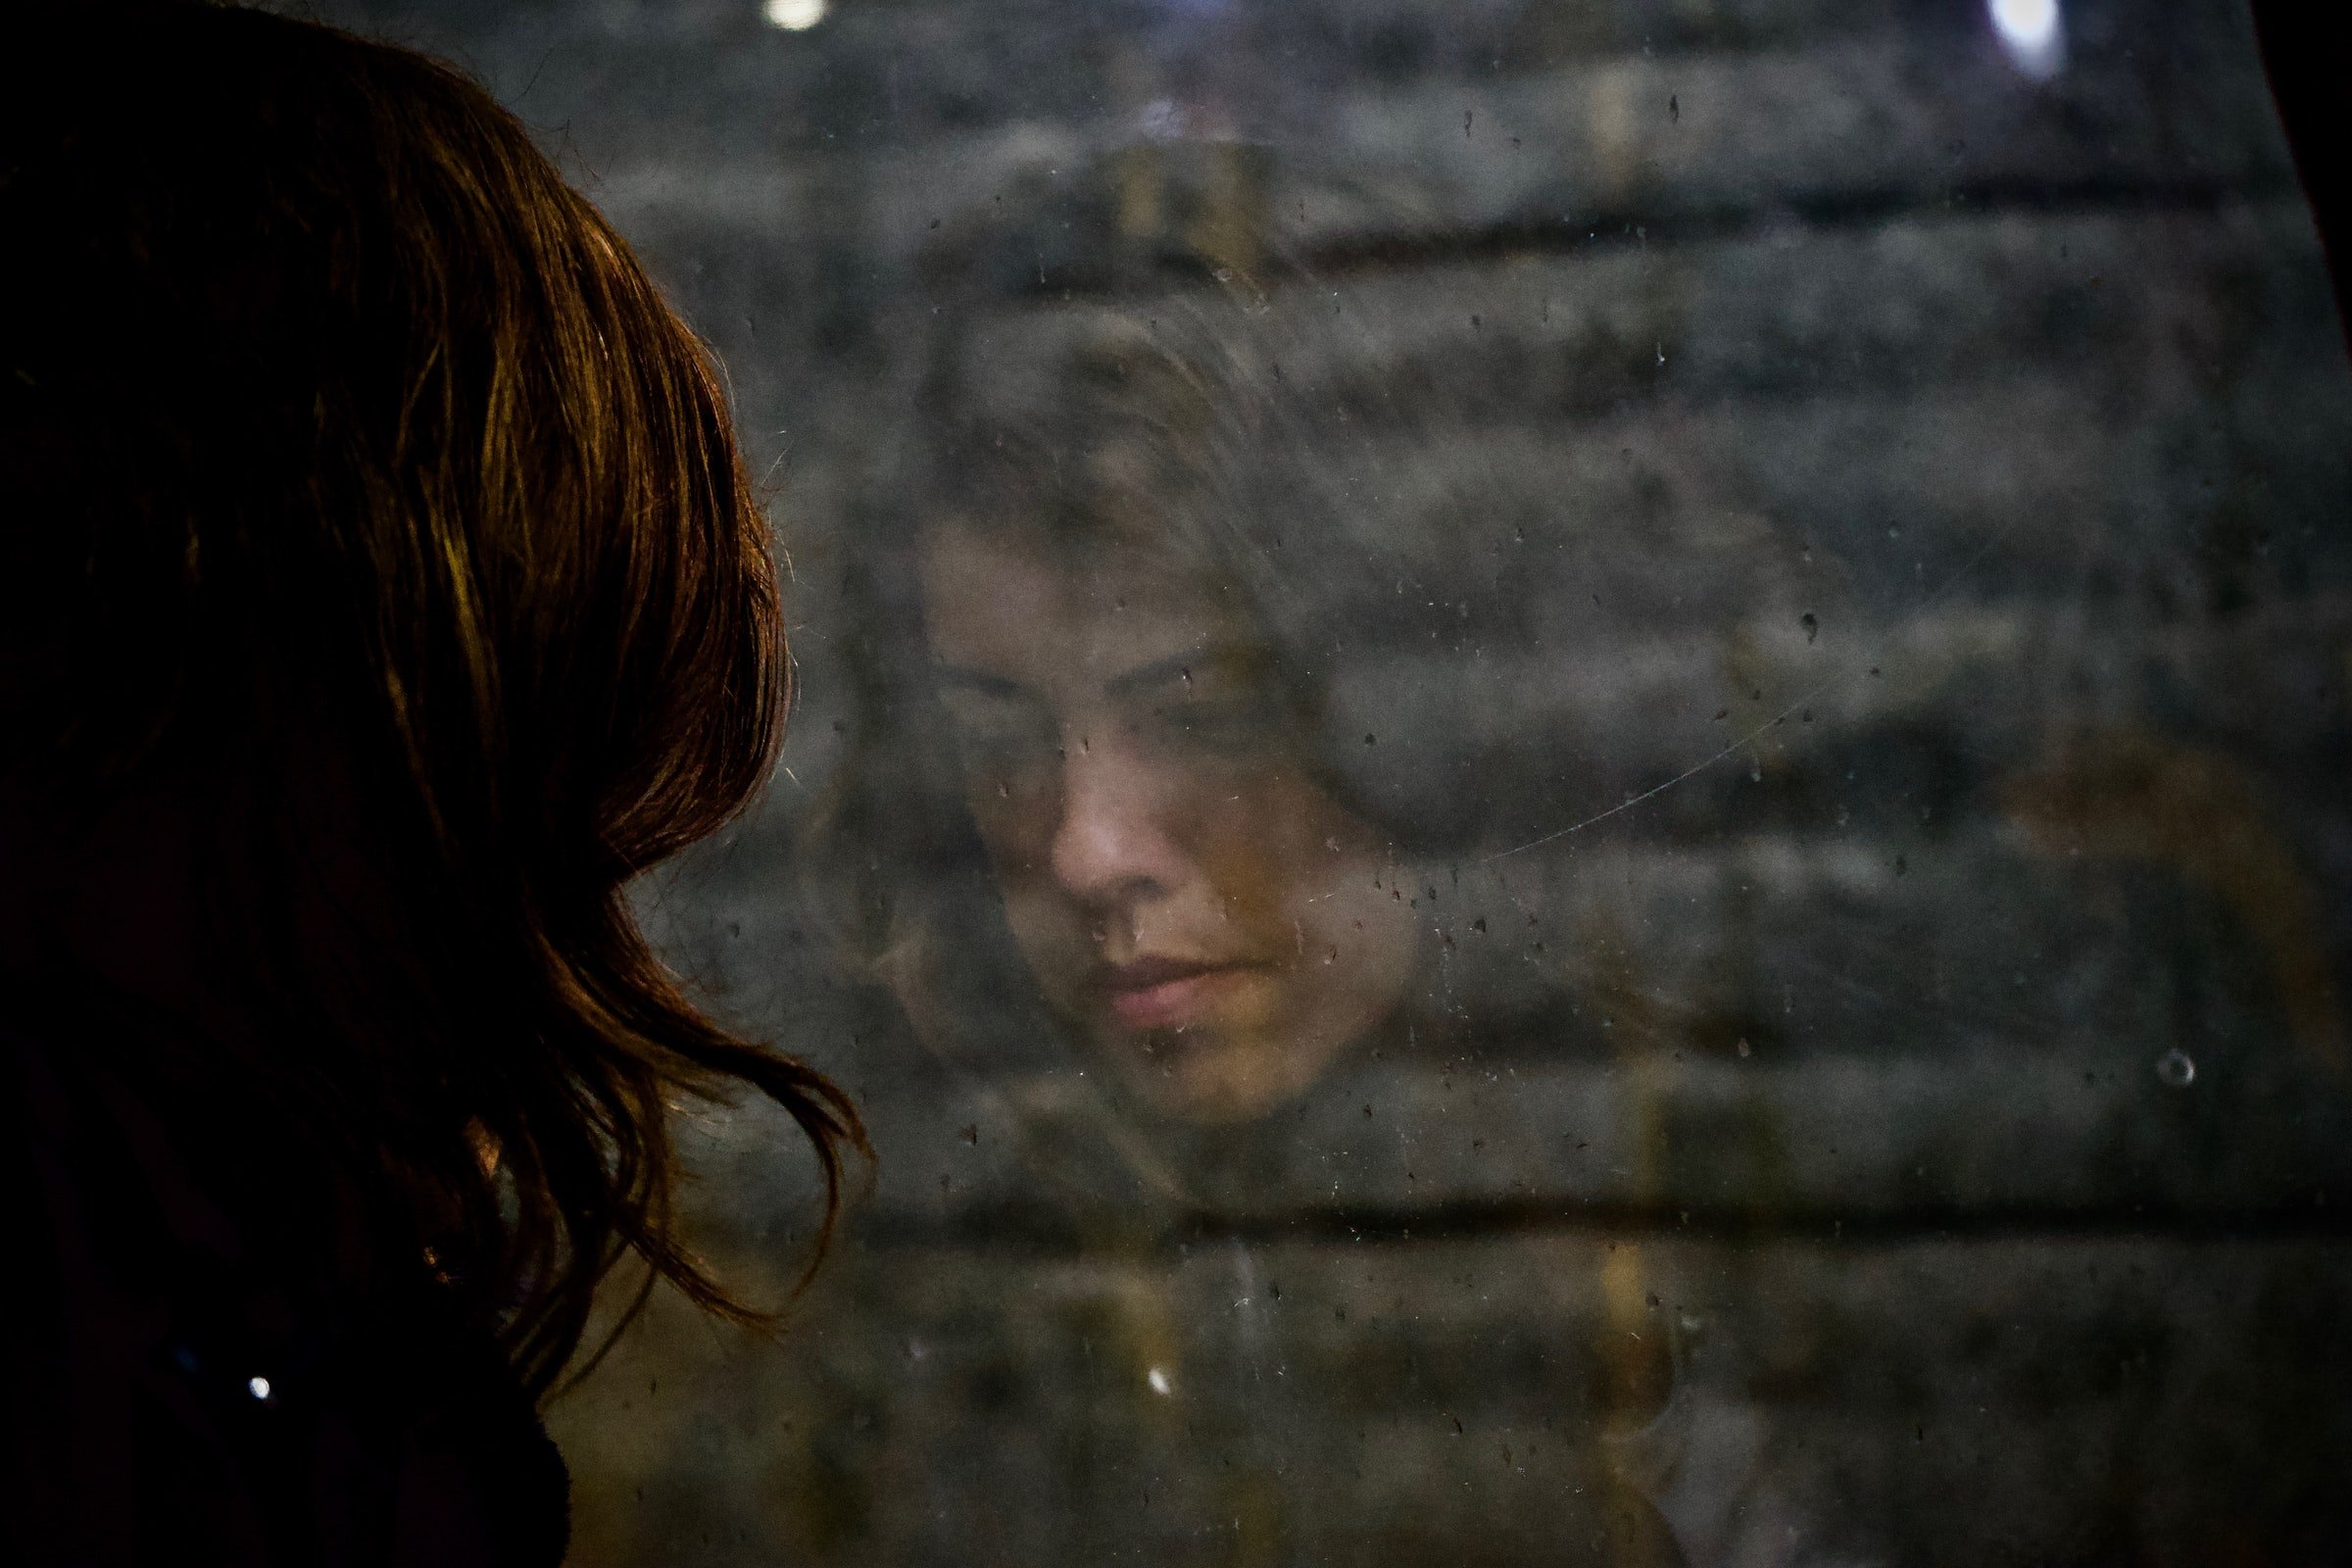 A woman standing near a window. | Source: Unsplash